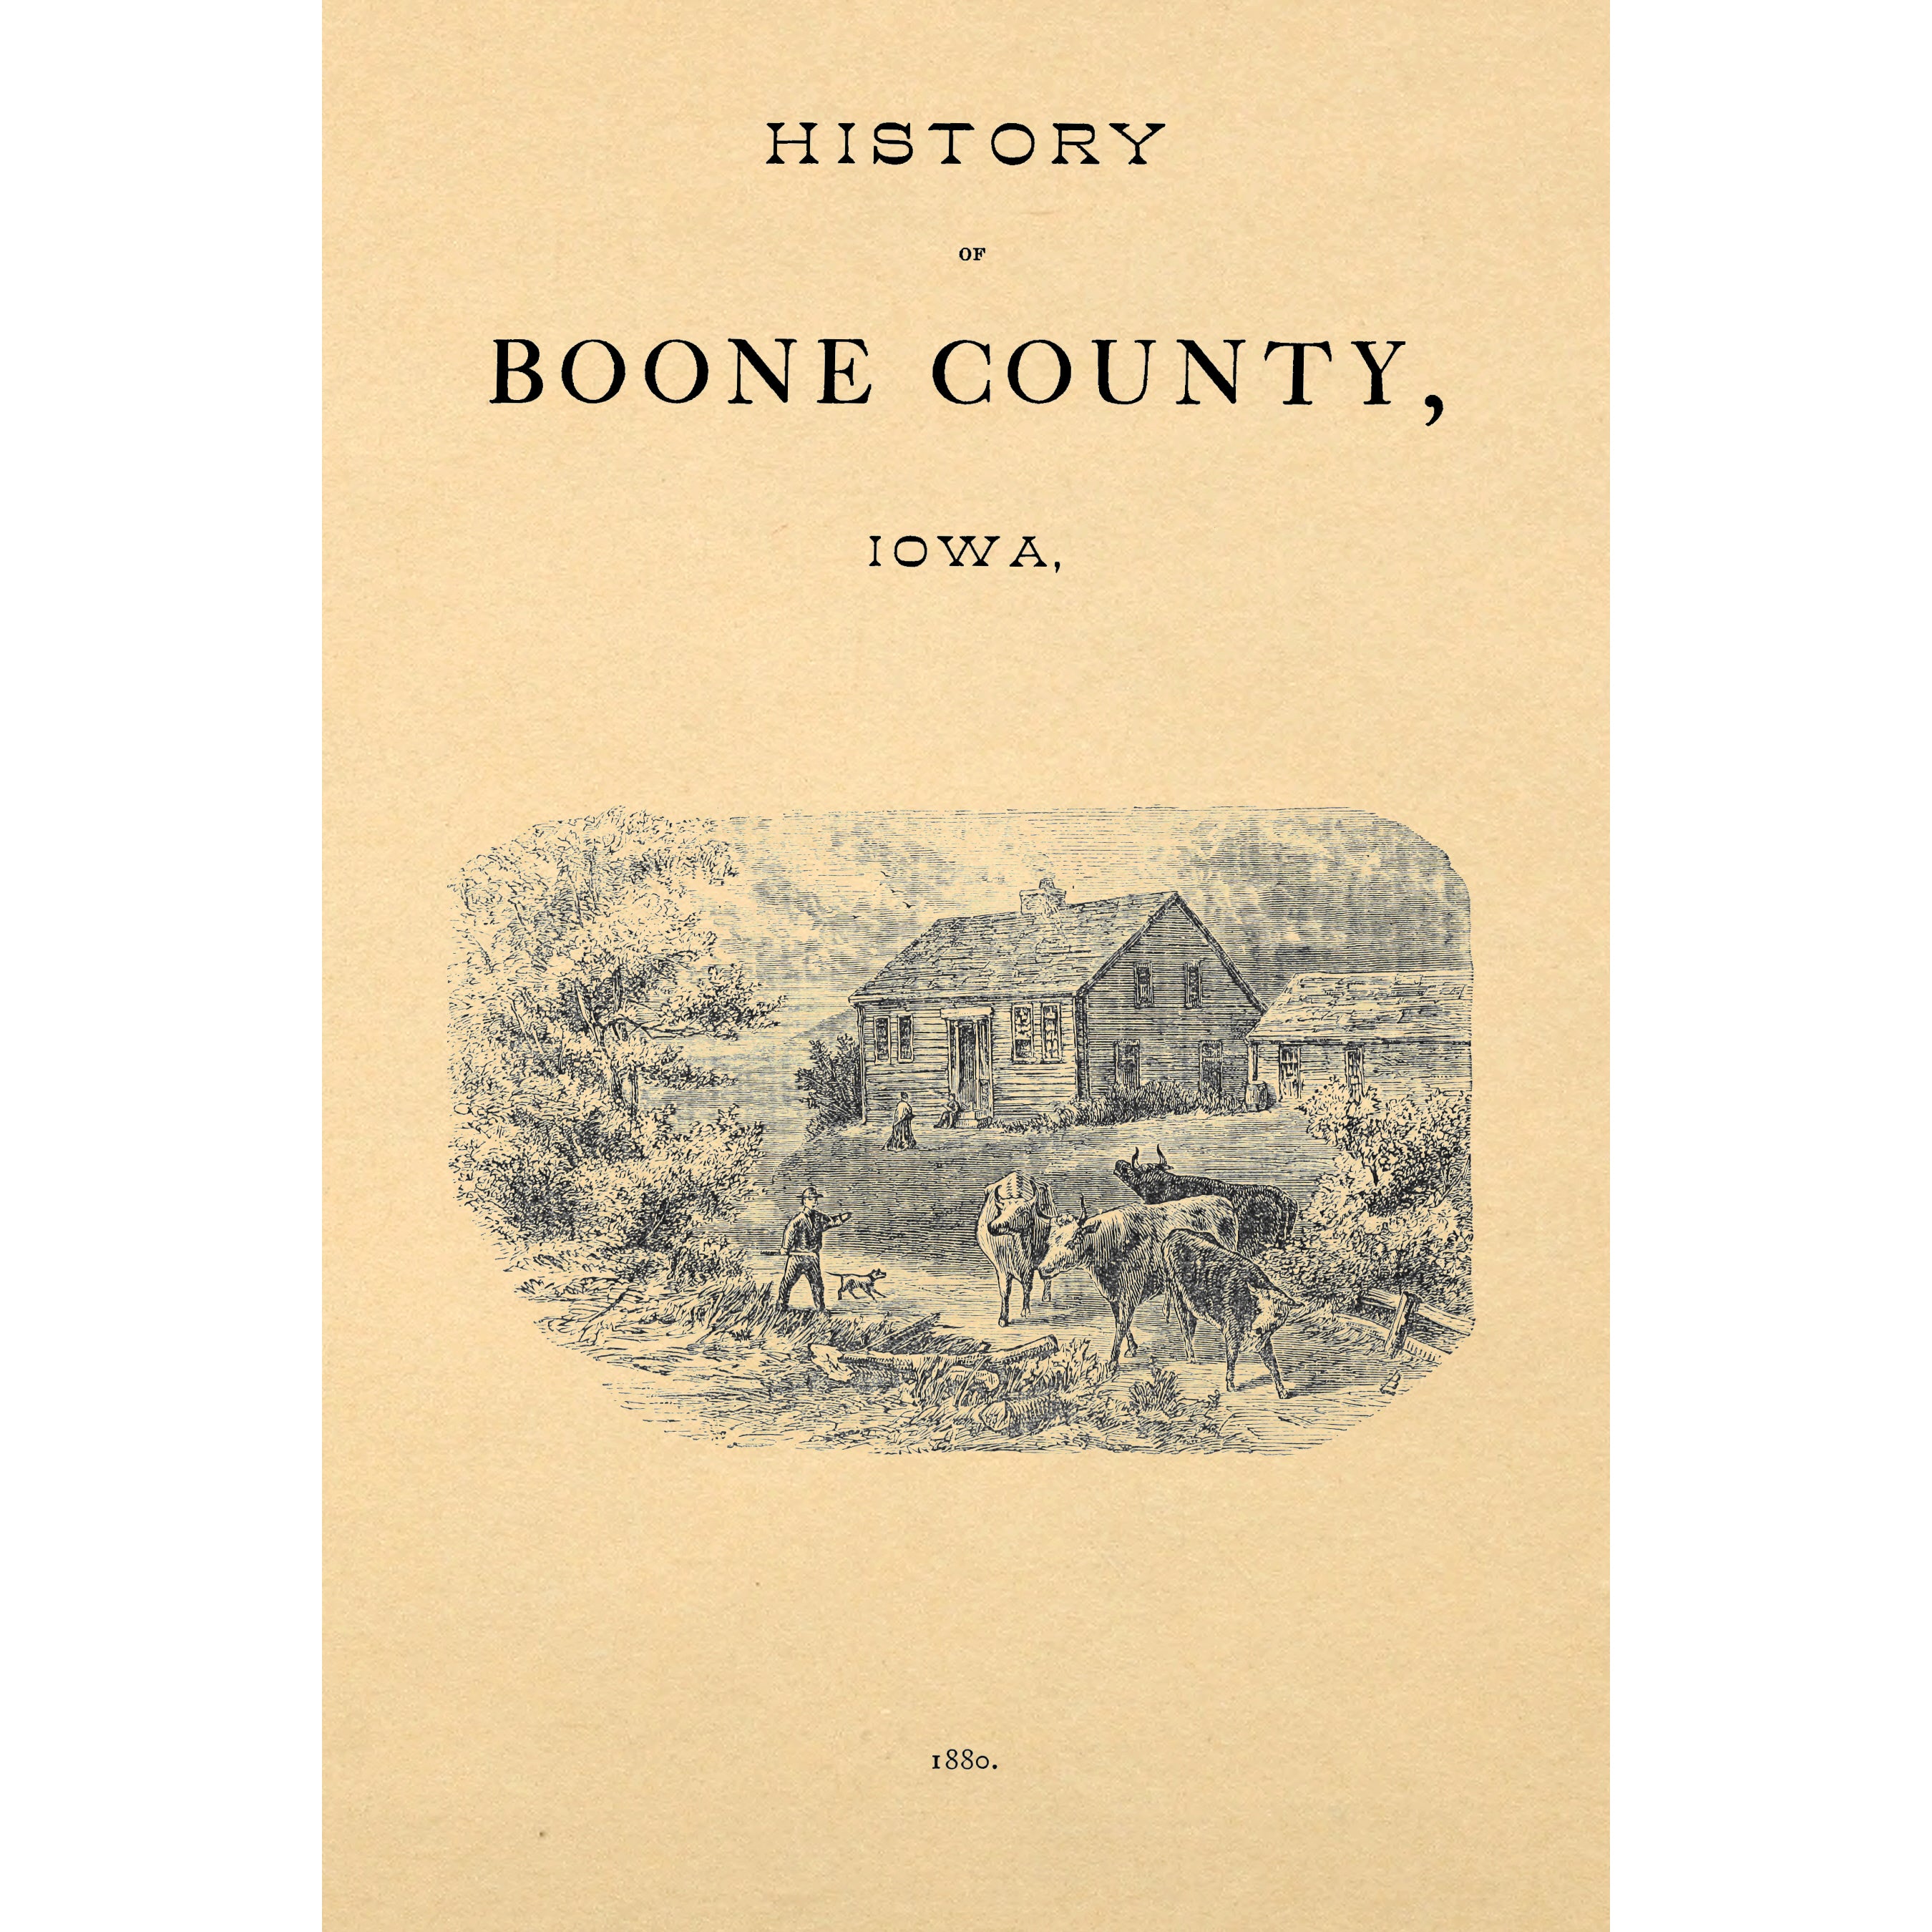 The History of Boone County, Iowa